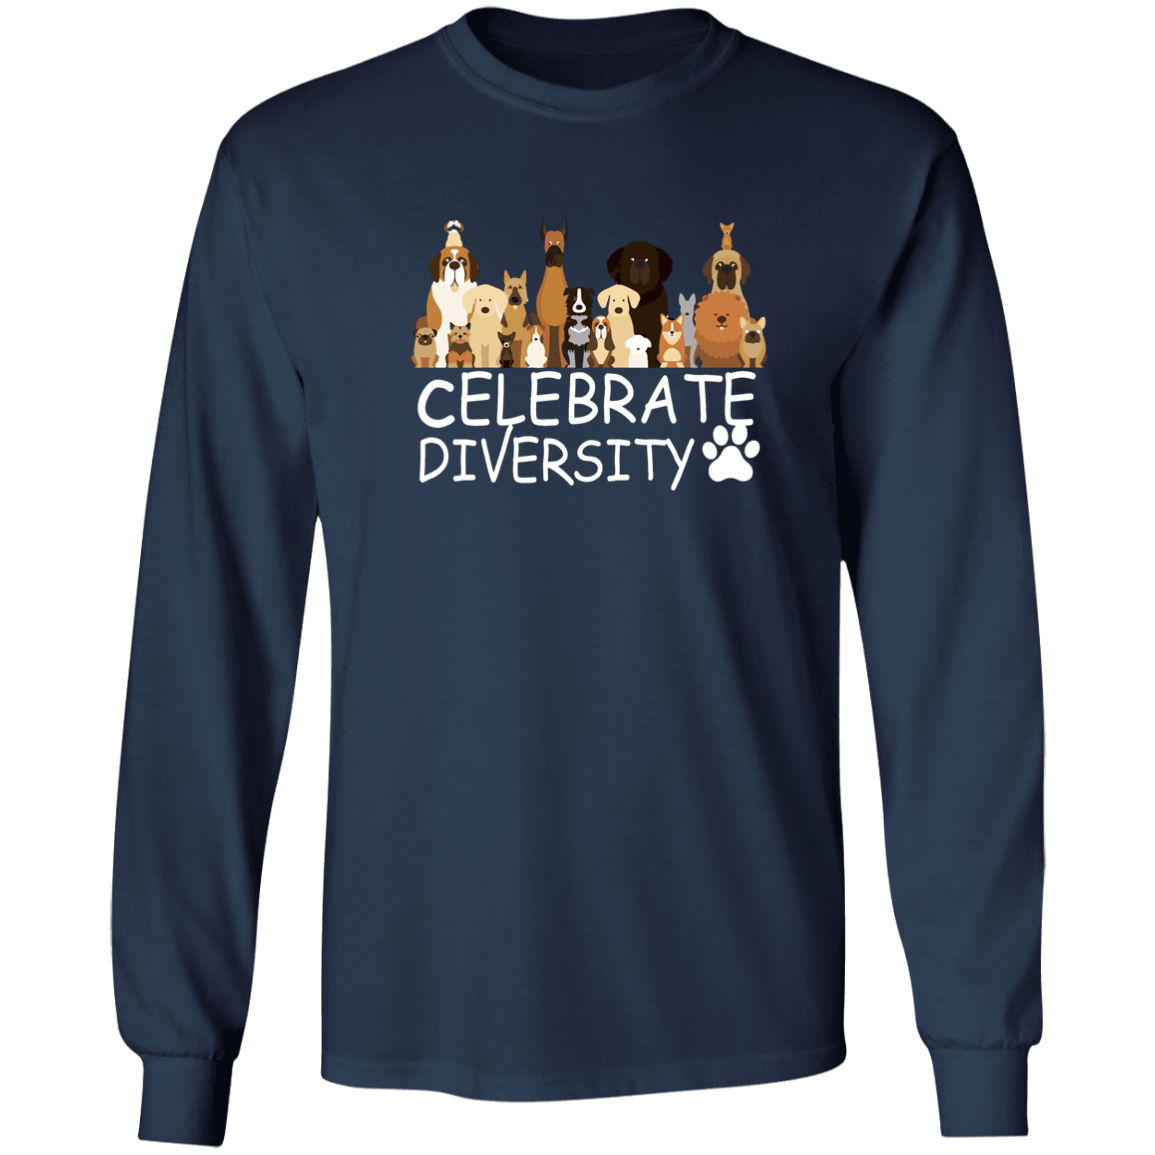 Celebrate Diversity - Long Sleeve T Shirt.